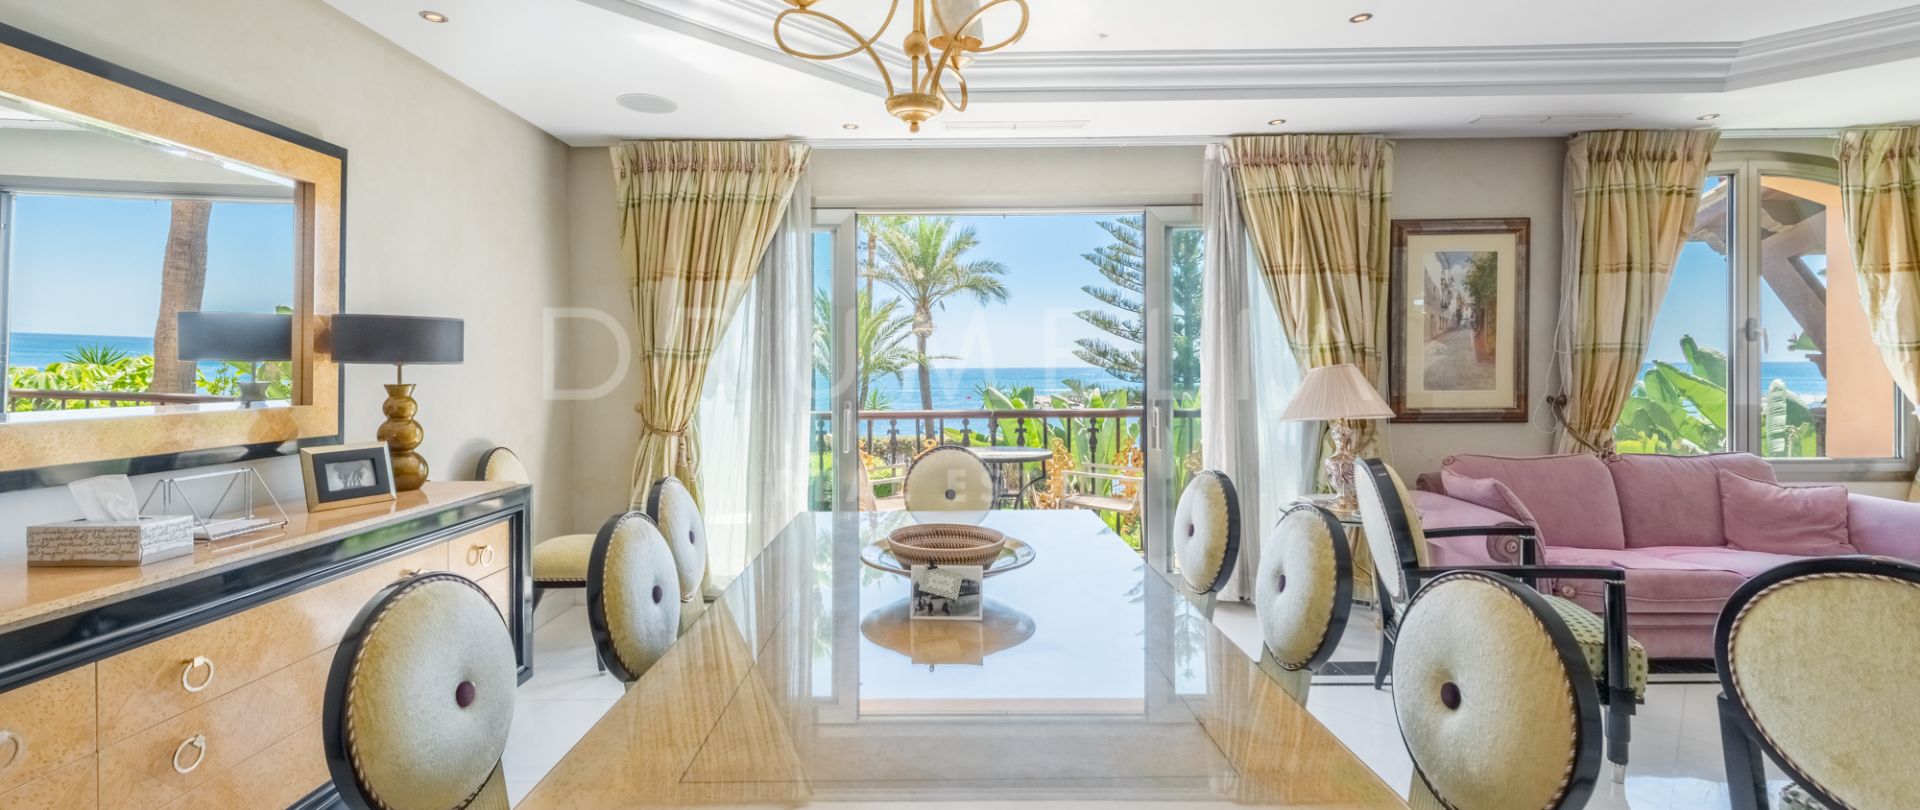 Luxus-Apartment in erster Strandlinie mit fantastischem Meerblick in Puerto Banus, Marbella